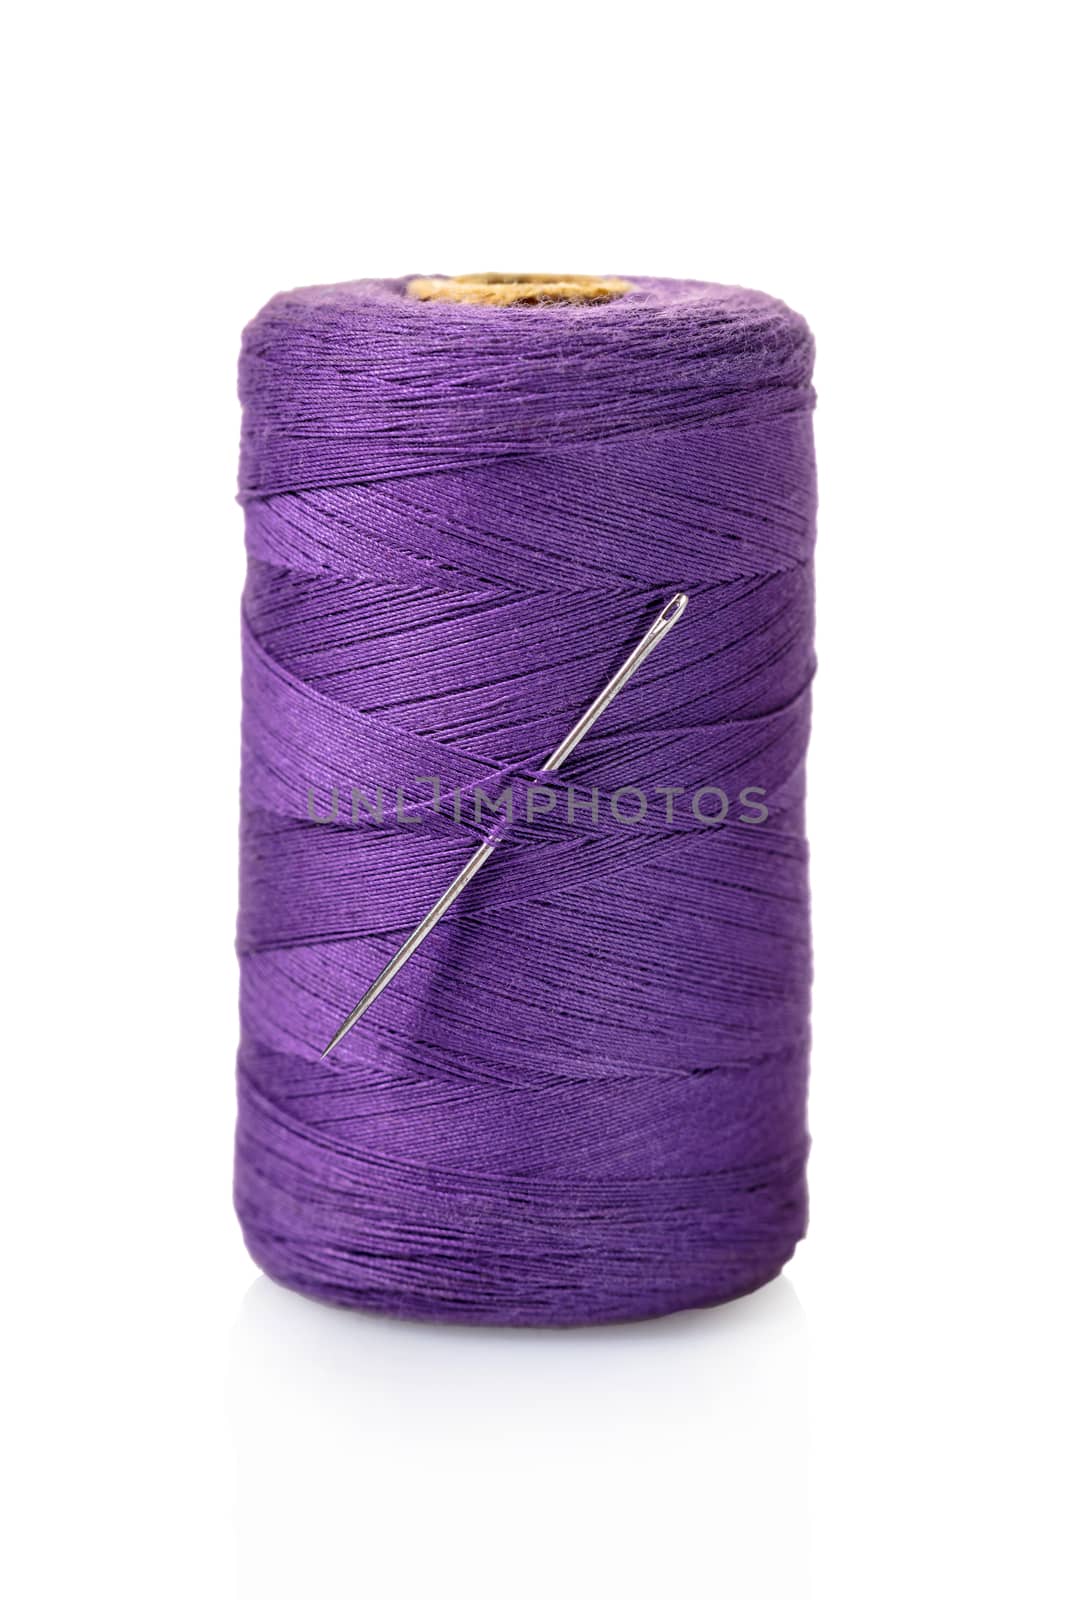 spool of purple threads  by MegaArt